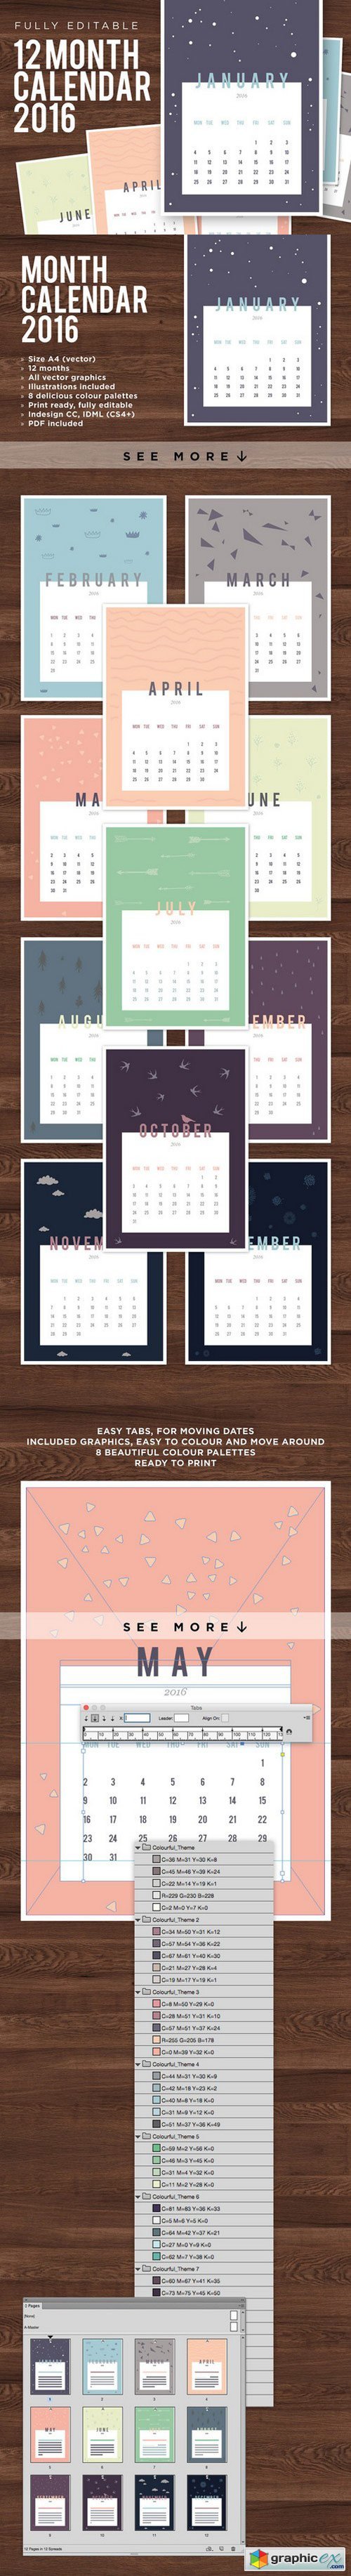 2016 - Calendar Template